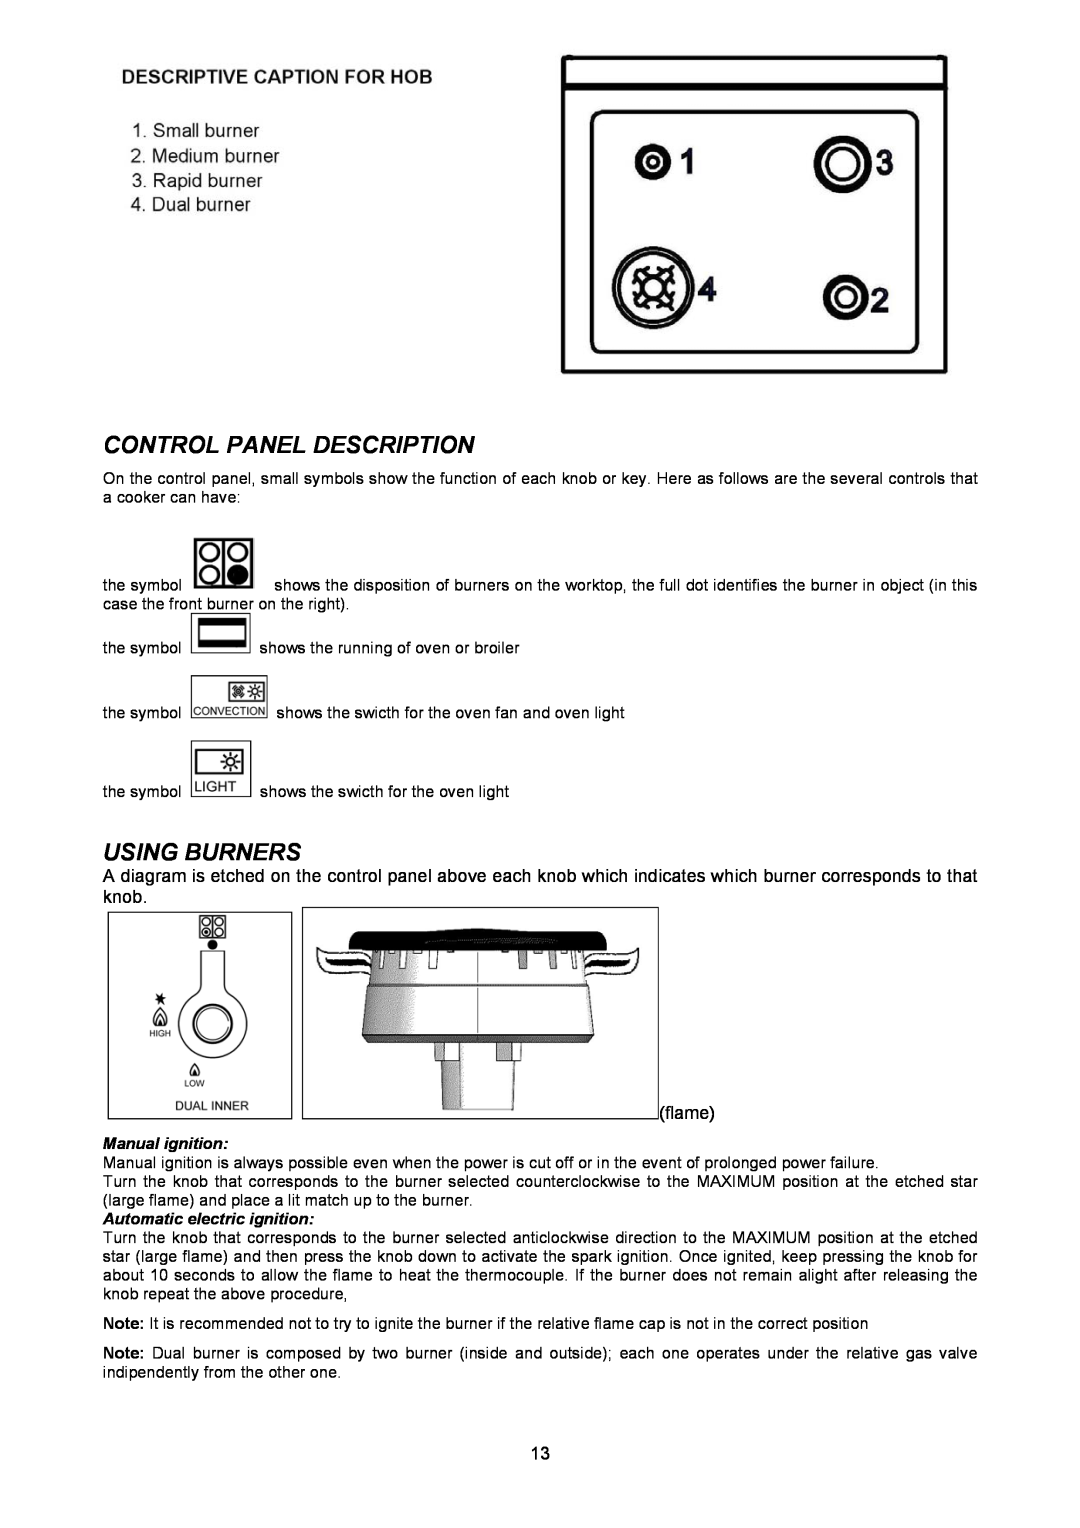 Bertazzoni X304GGVX Control Panel Description, Using Burners, flame, Manual ignition, Automatic electric ignition 